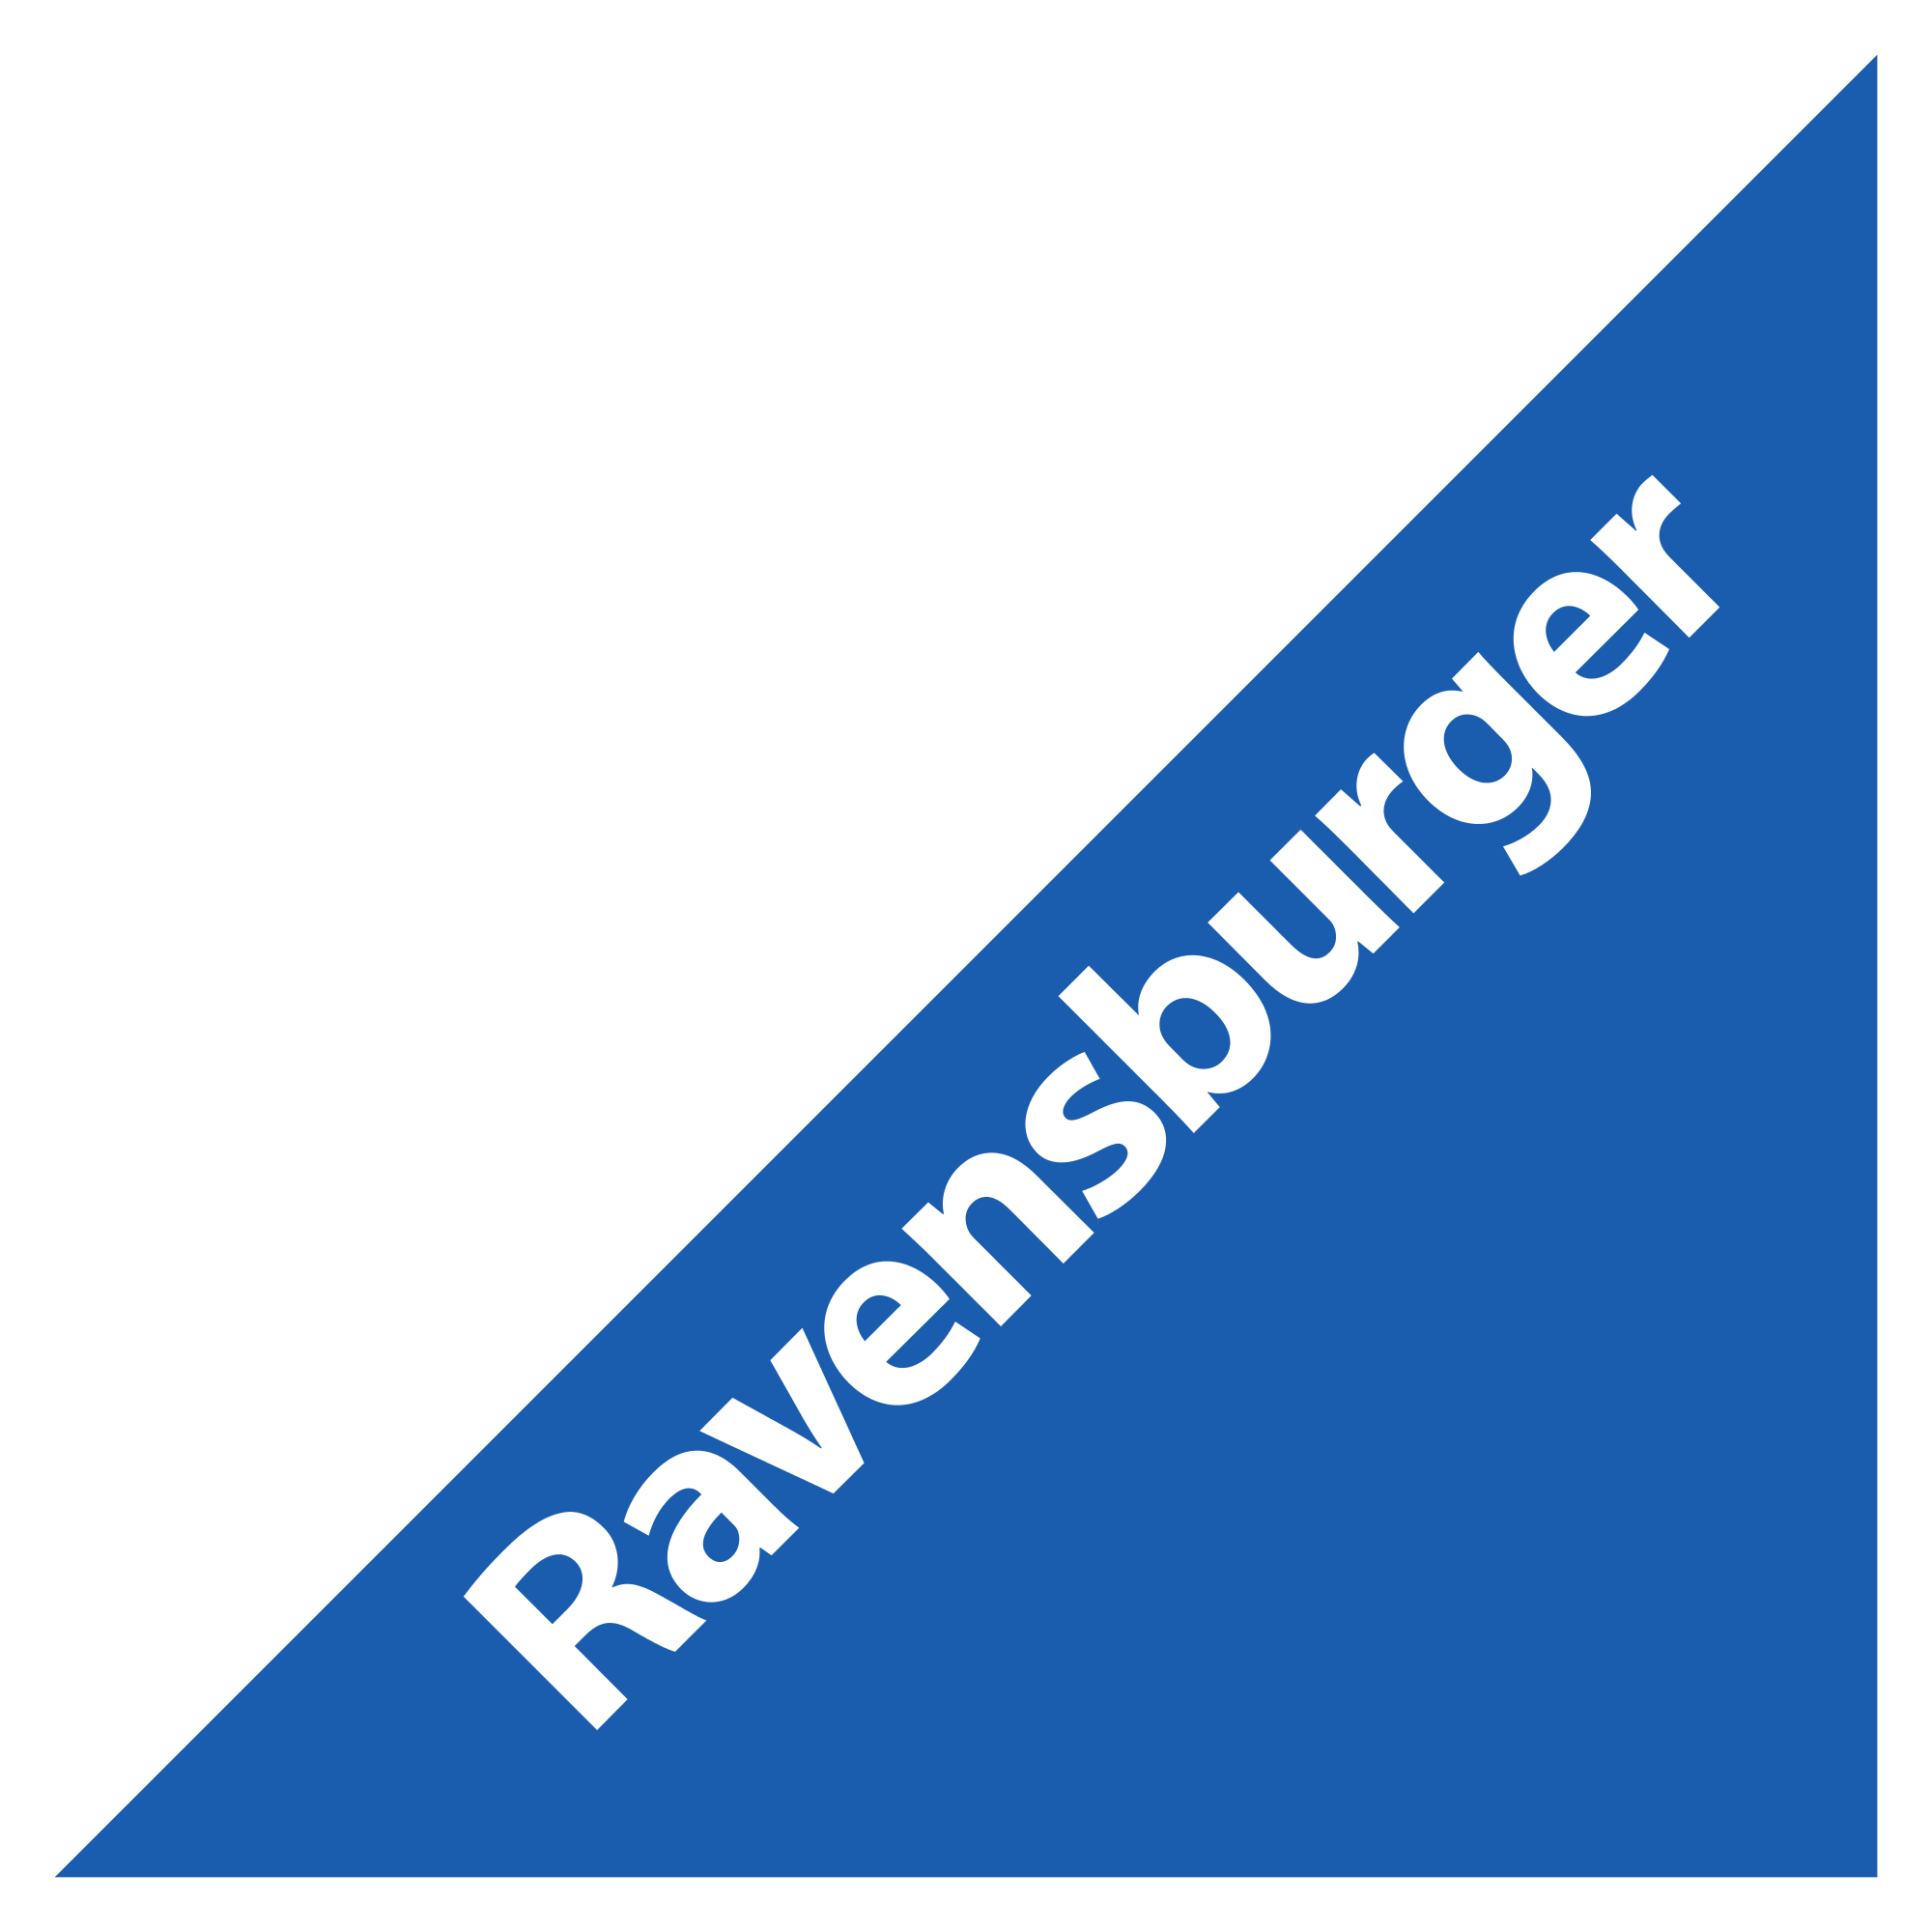 Ravensburger logo.svg